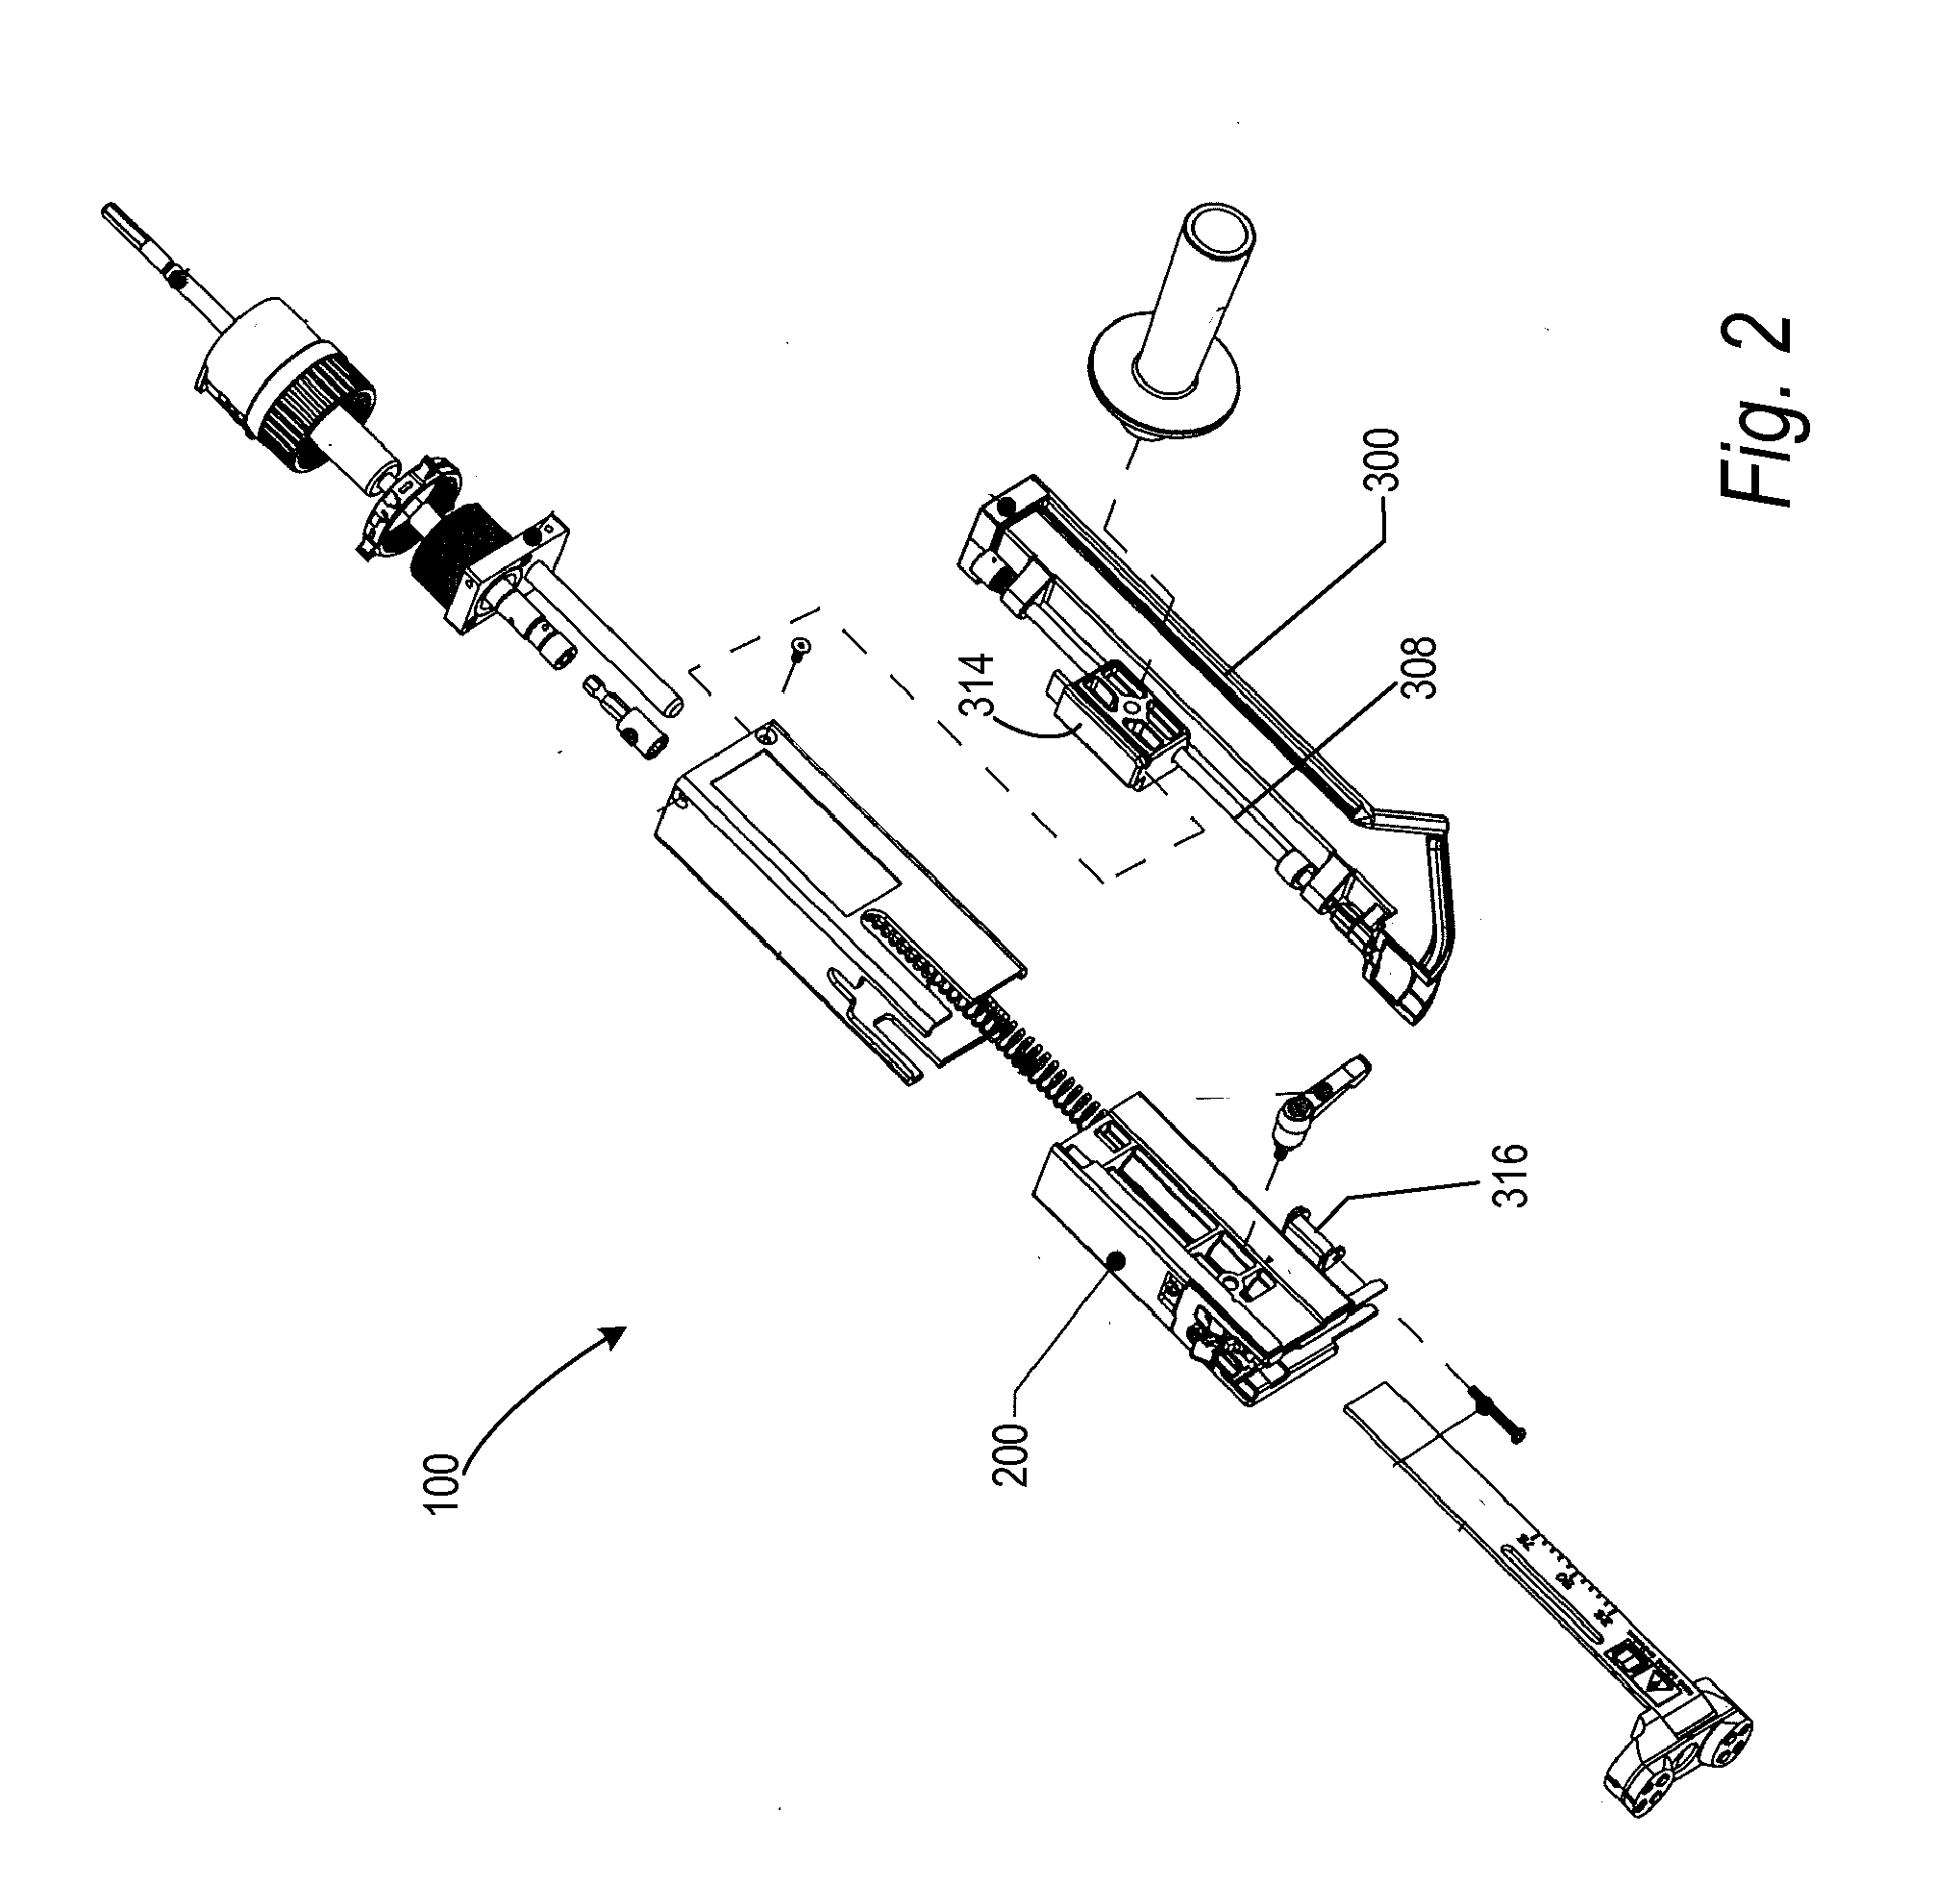 Screwstrip advance mechanism and feeder for a power screwdriver